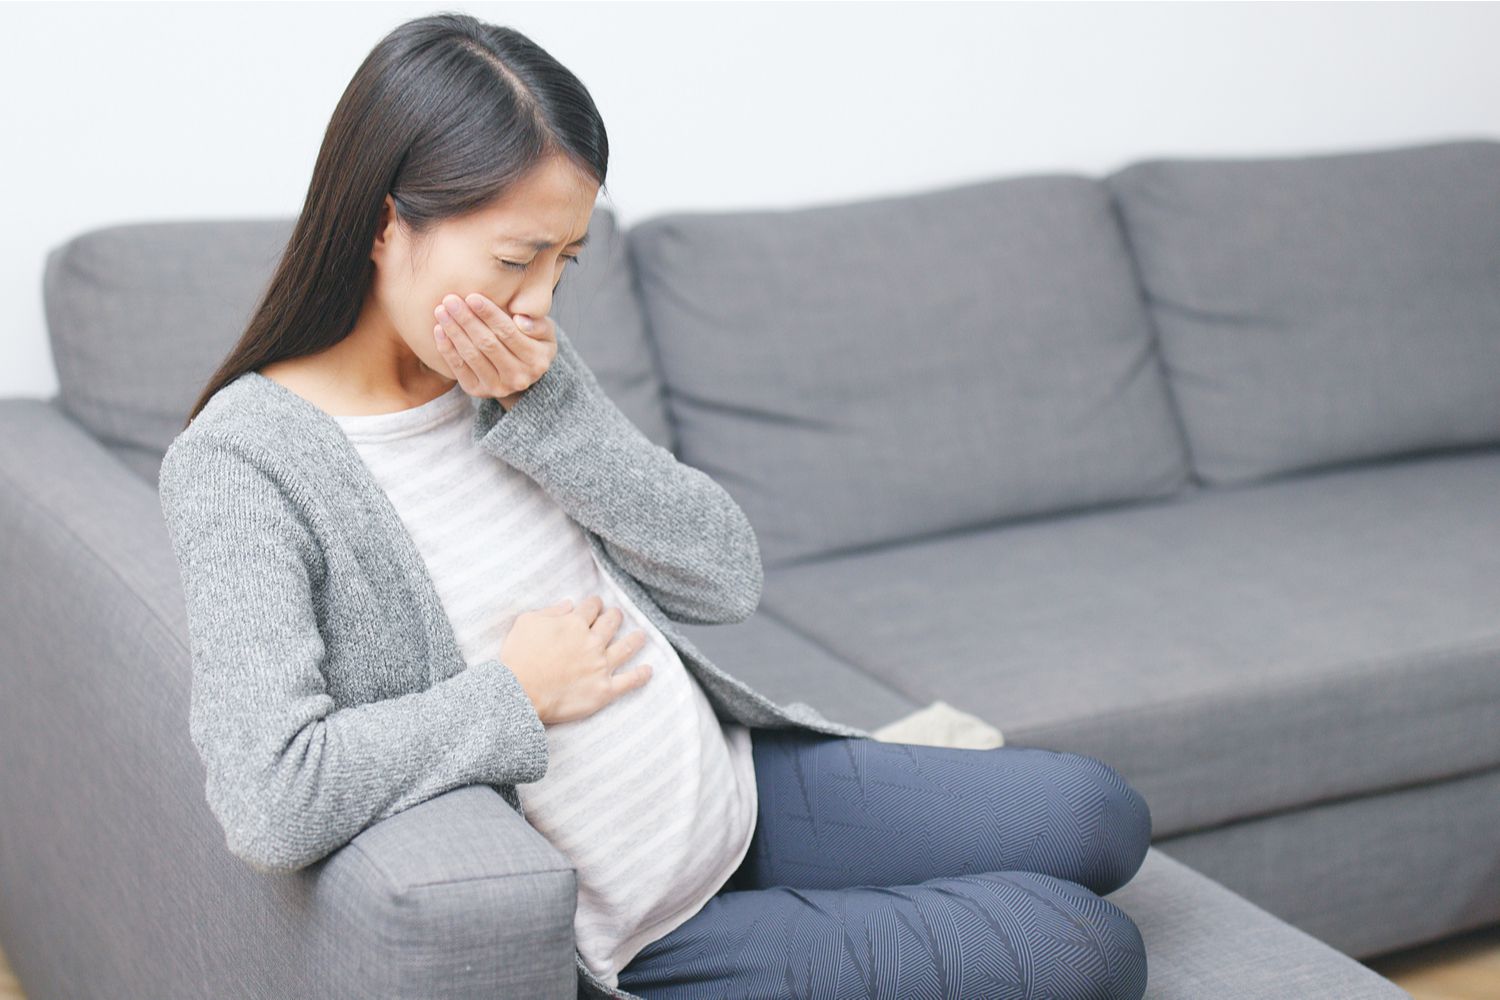 How Can Pregnancy Affect Sleep